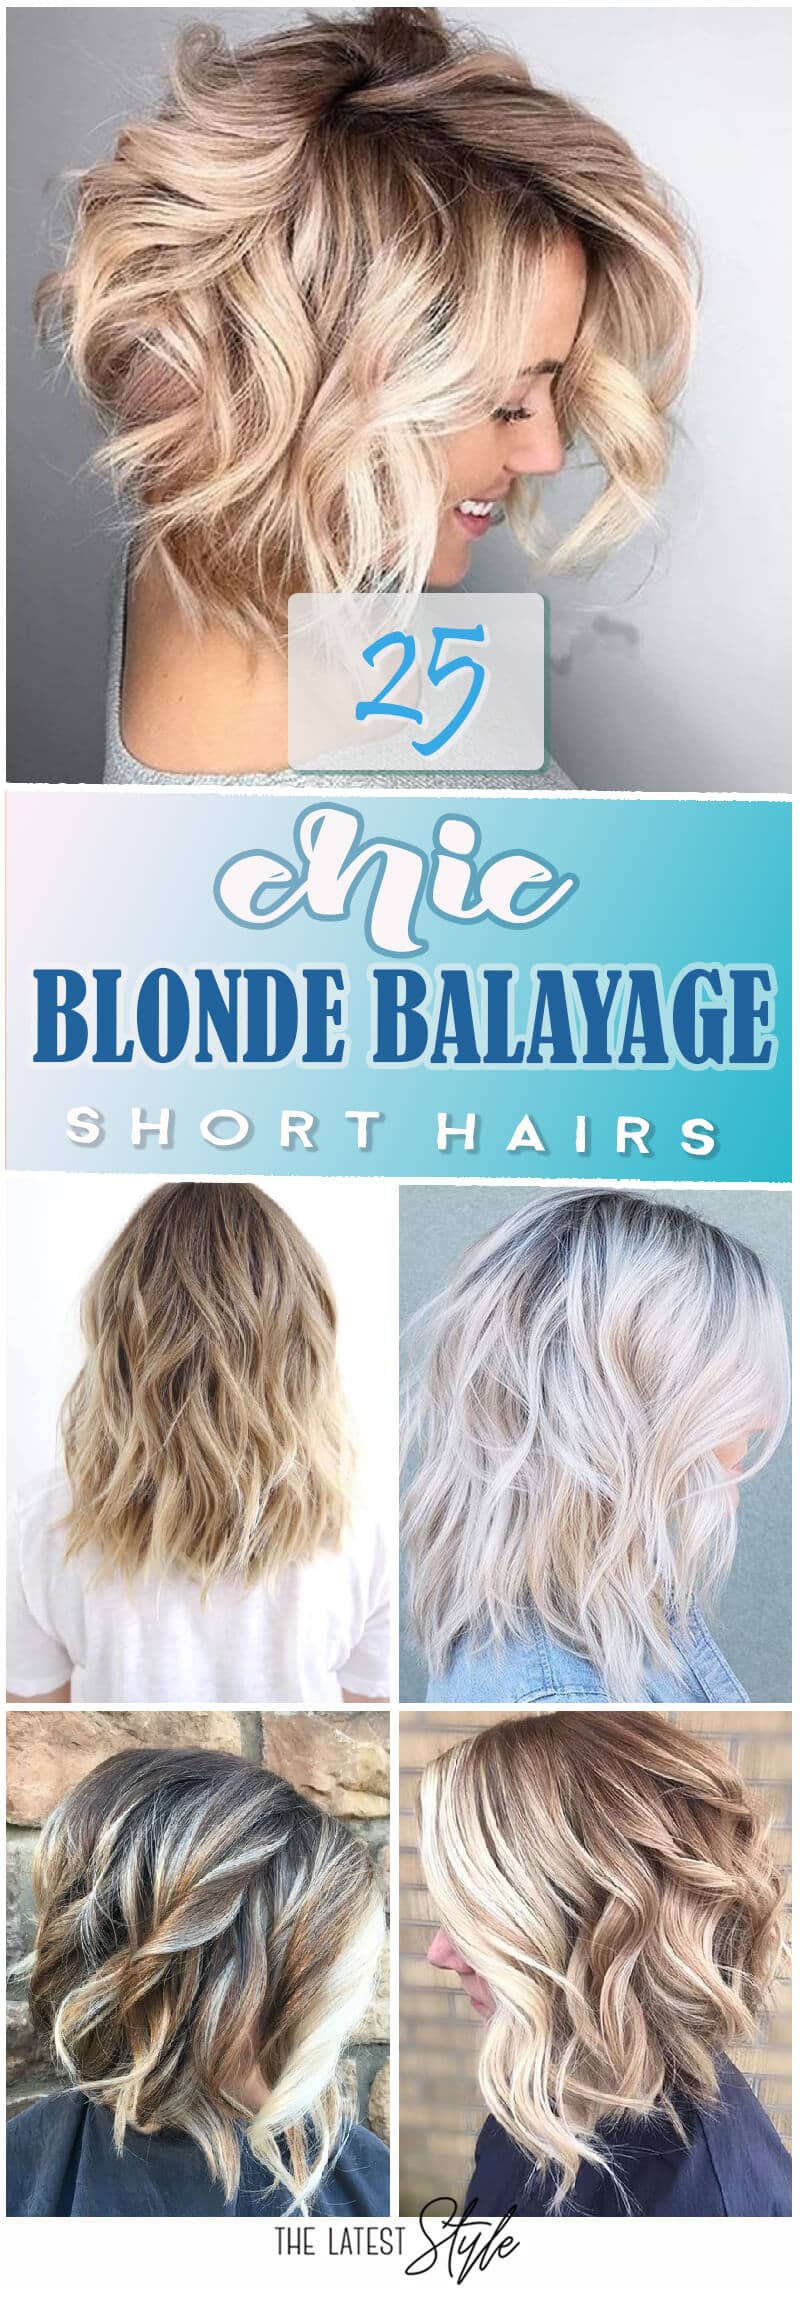 25 Blonde Balayage Short Hair Looks You'll Love